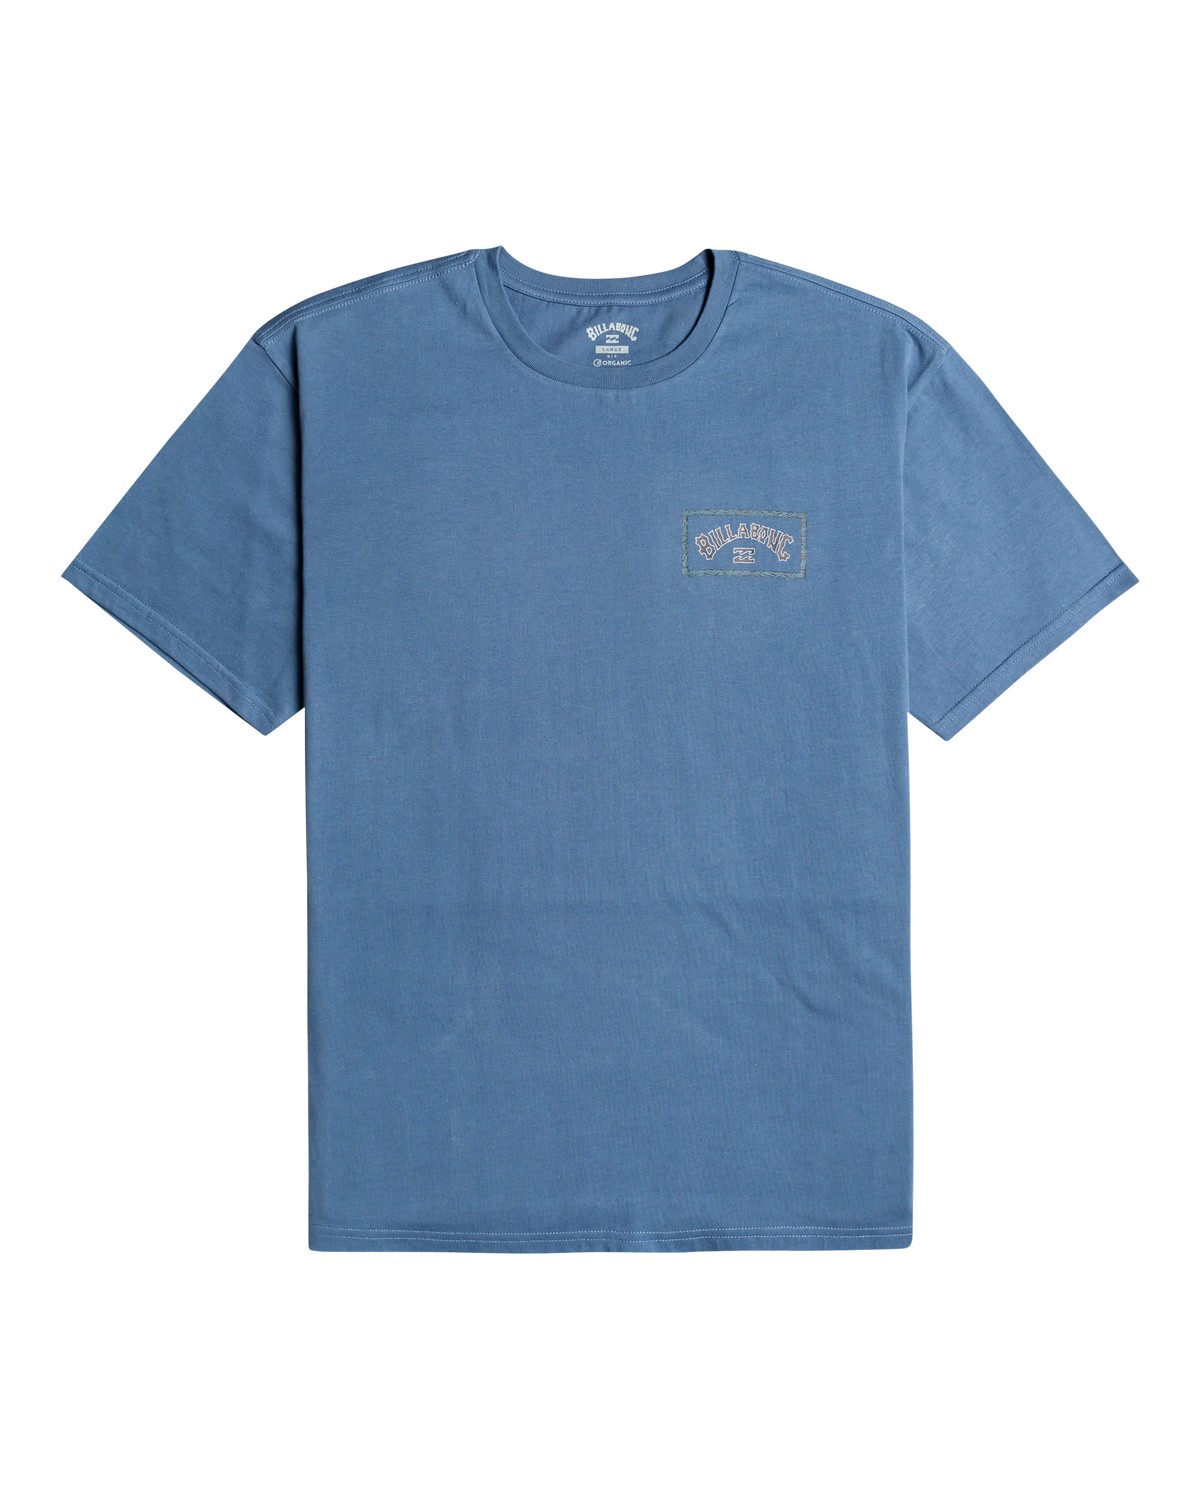 Billabong - Shirt für Herren - Kurzarm - Adiv arch ss - Basics - Staubig Blau